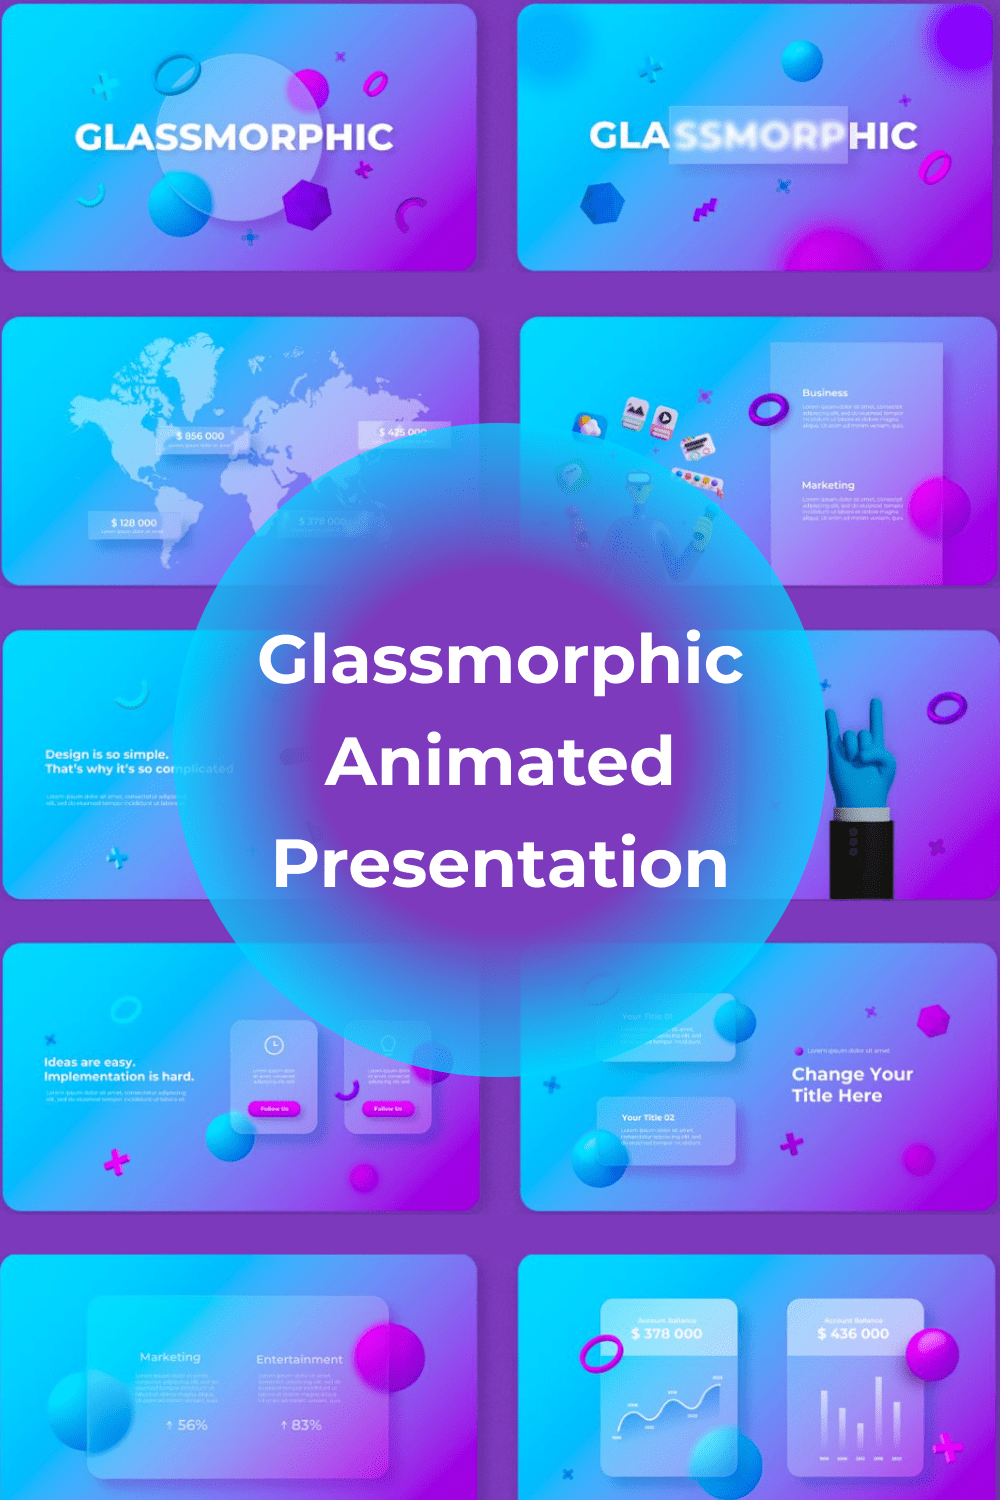 Glassmorphic Animated Presentation Pinterest.